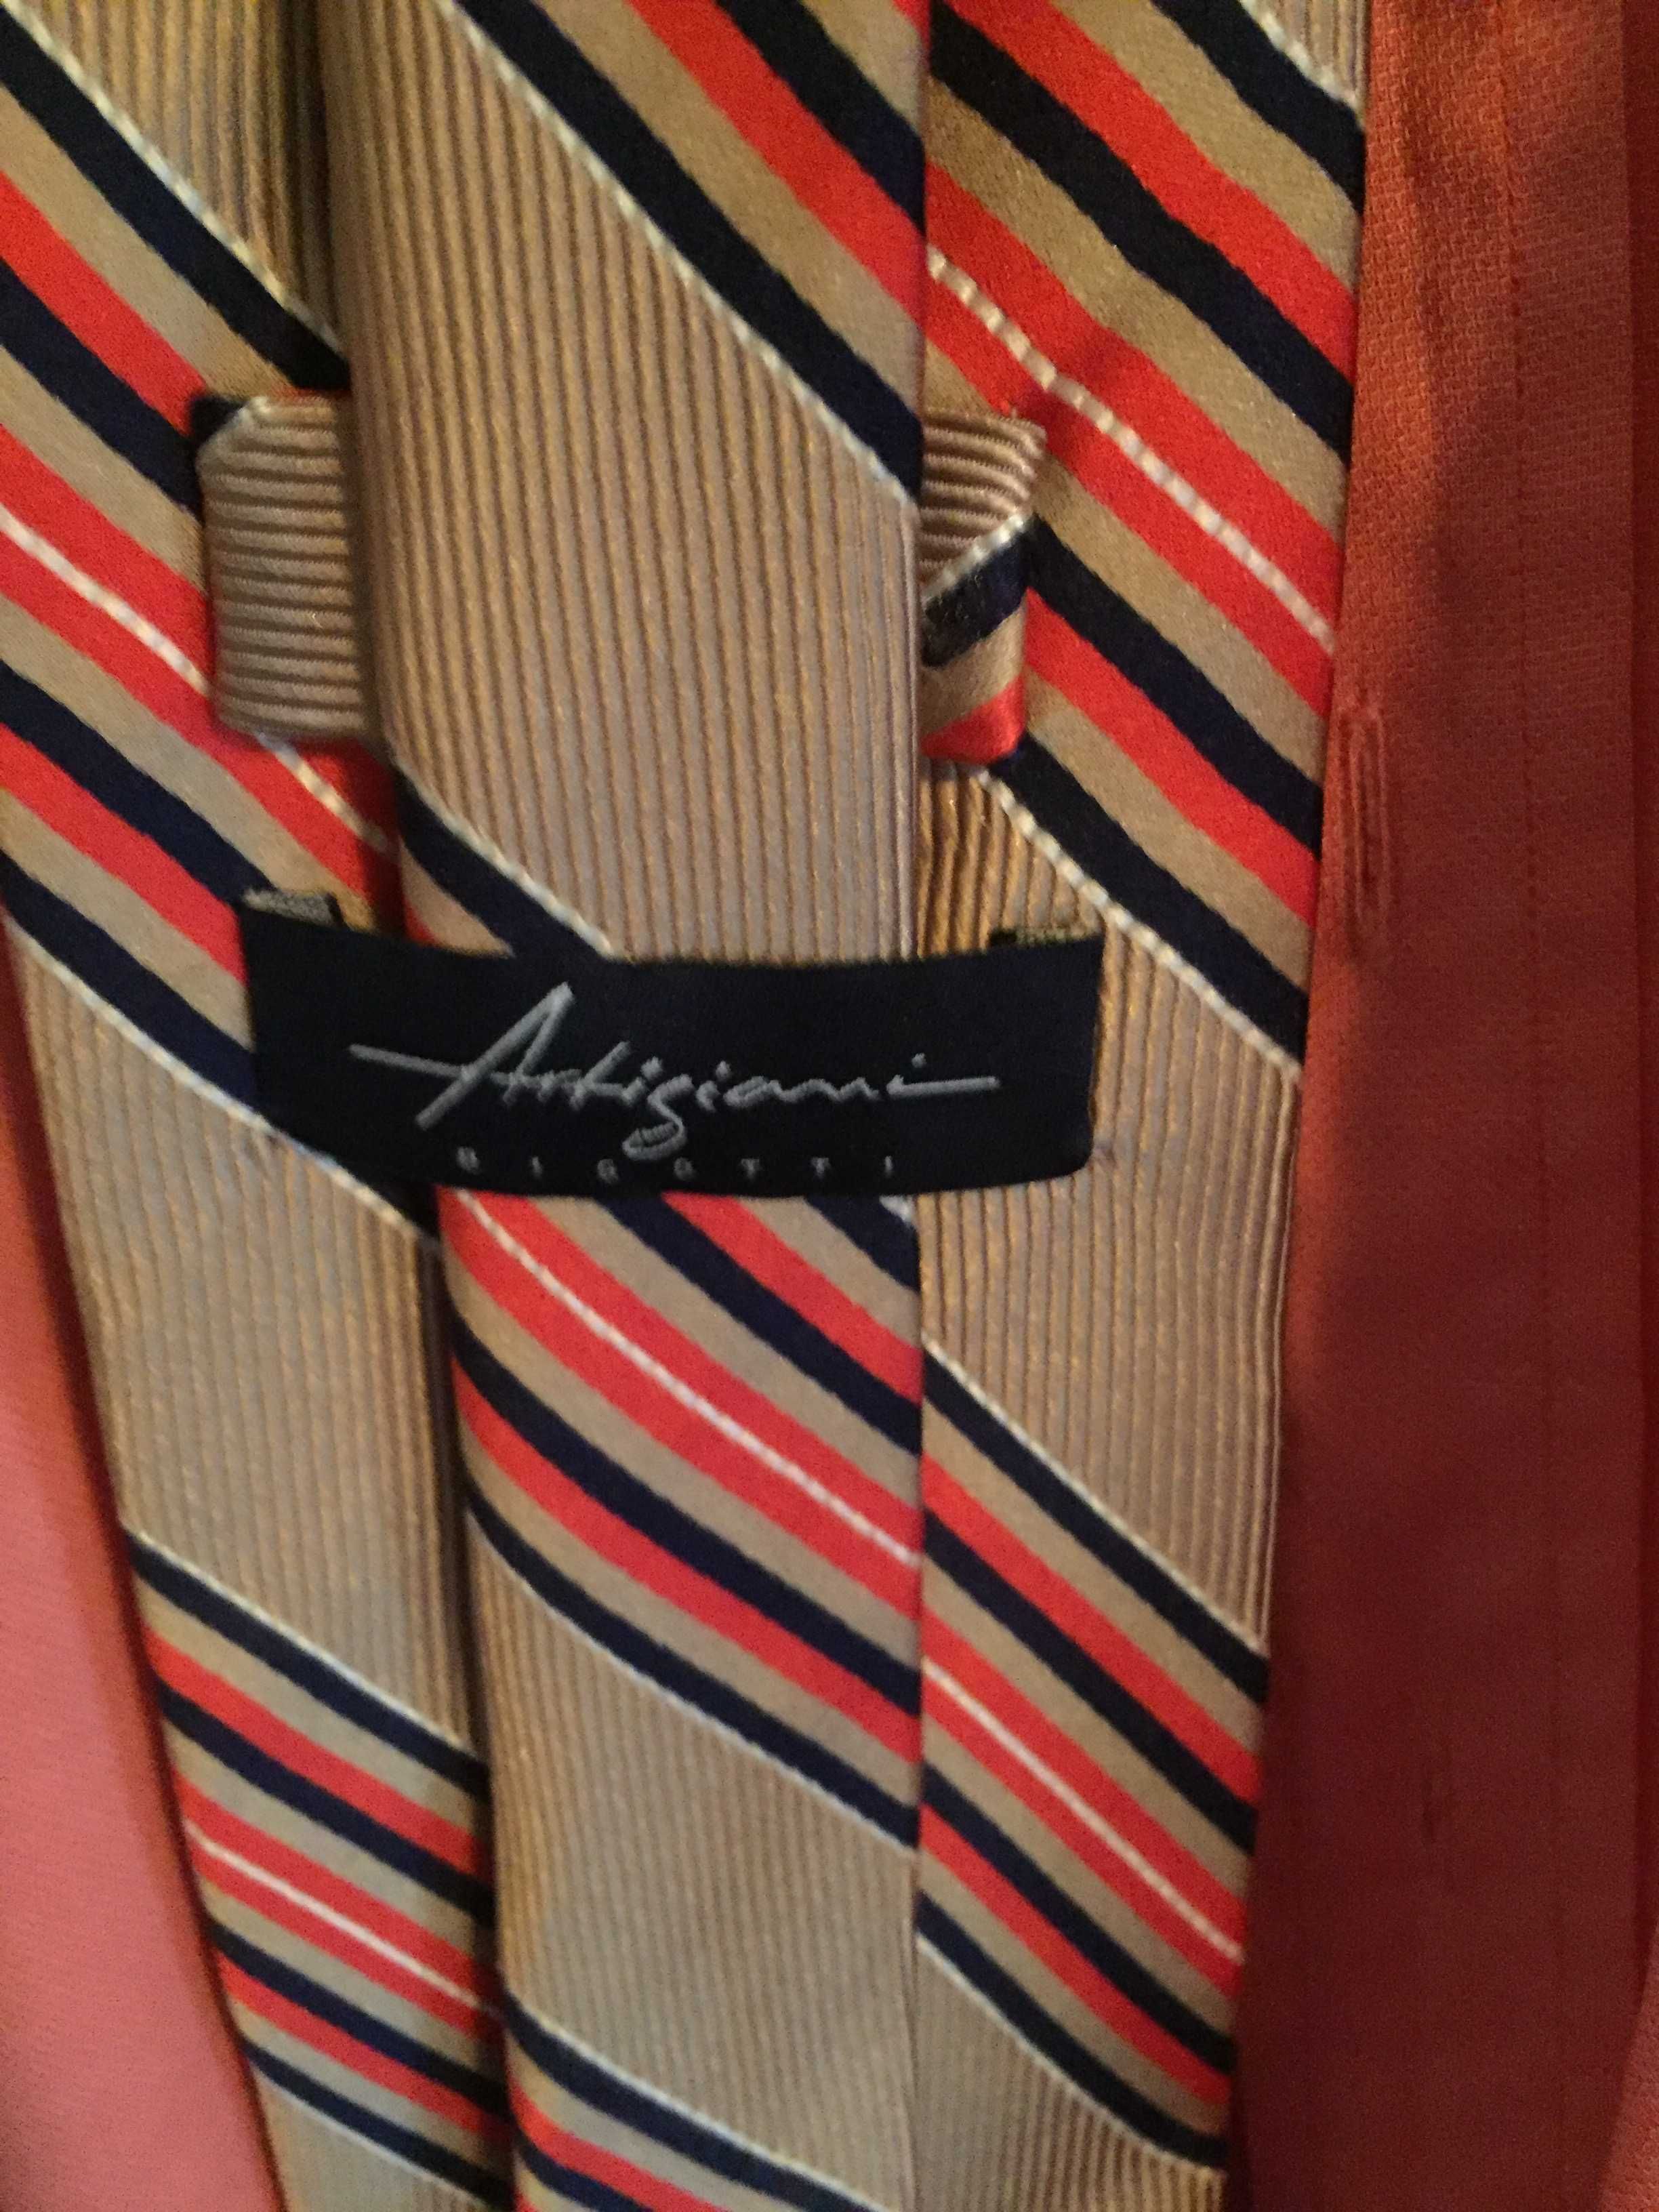 Camasa Bigotti + cravata Artigiani originale